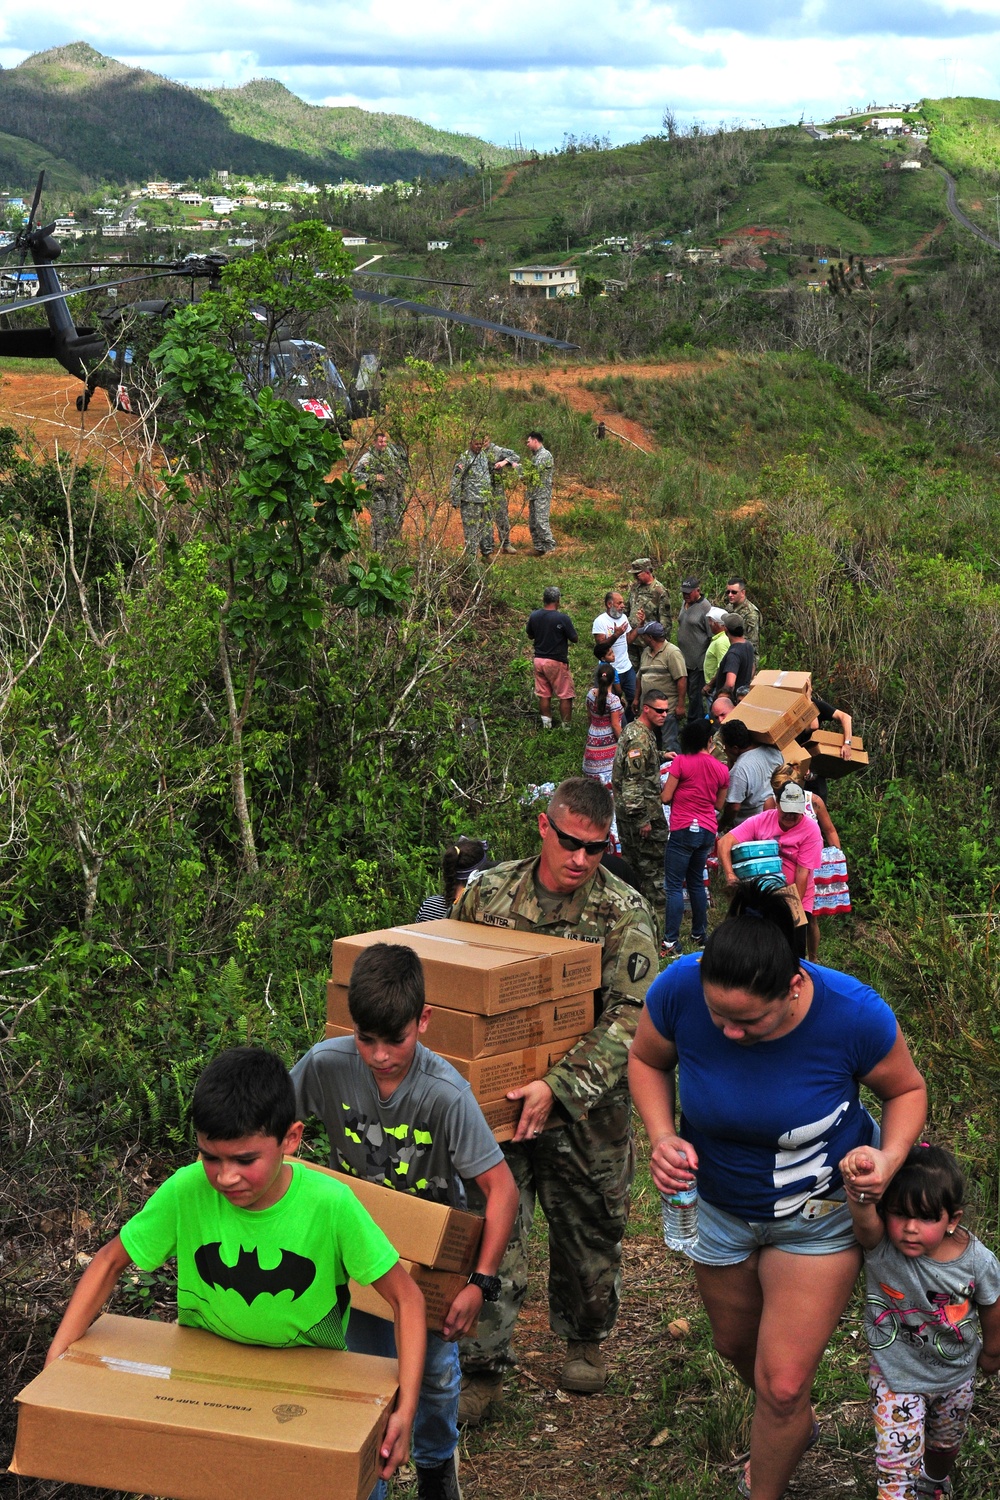 Helping Residents of Barranquitas, PR